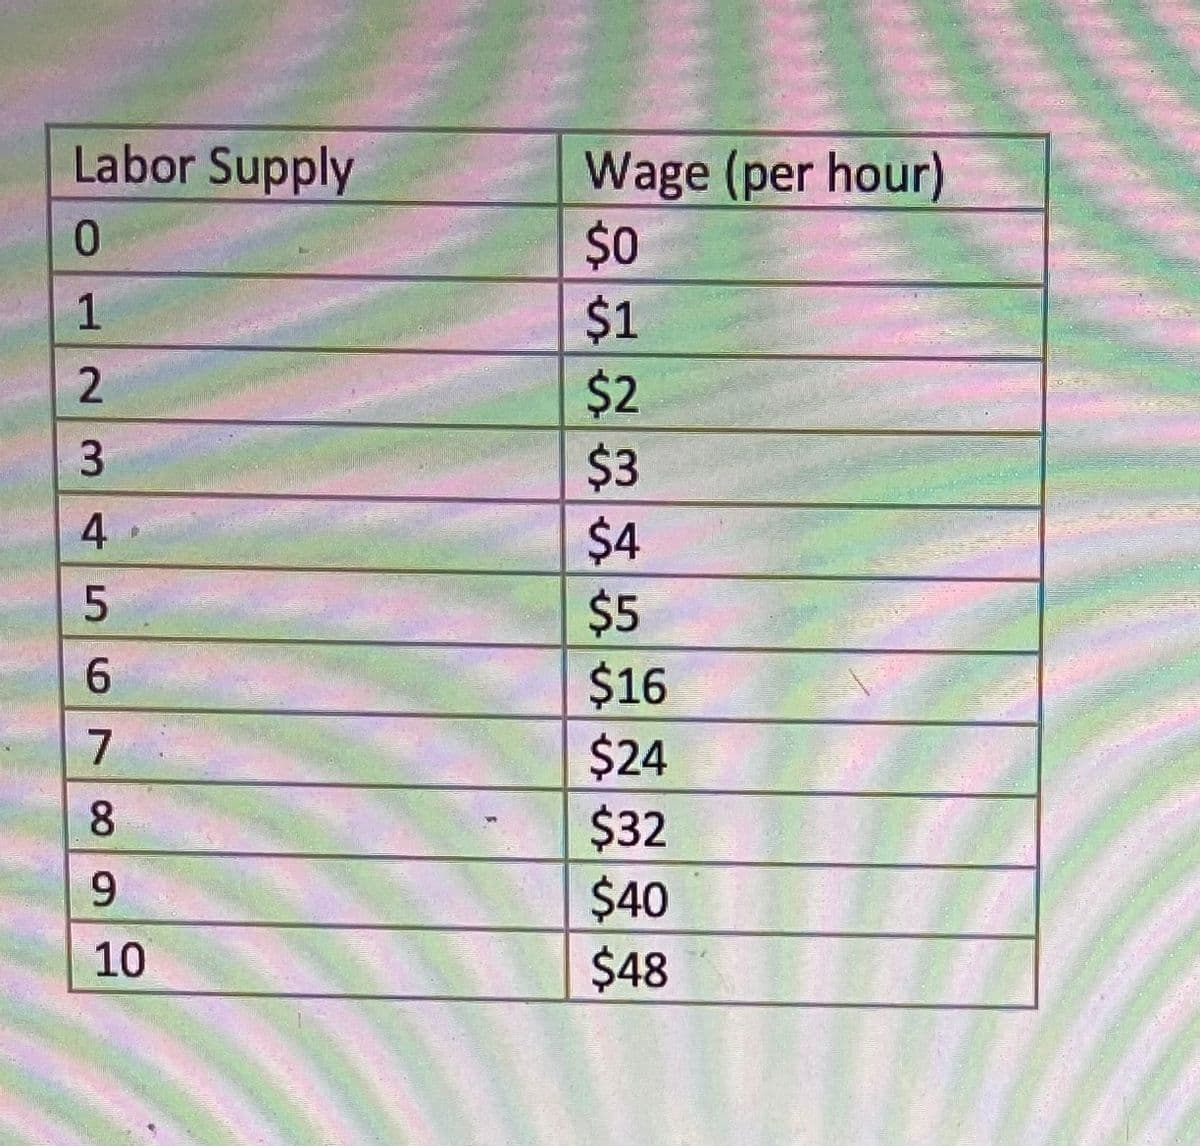 Labor Supply
0
1
2
3
45
6
7
8
9
10
Wage (per hour)
$0
$1
$2
$3
$4
$5
$16
$24
$32
$40
$48